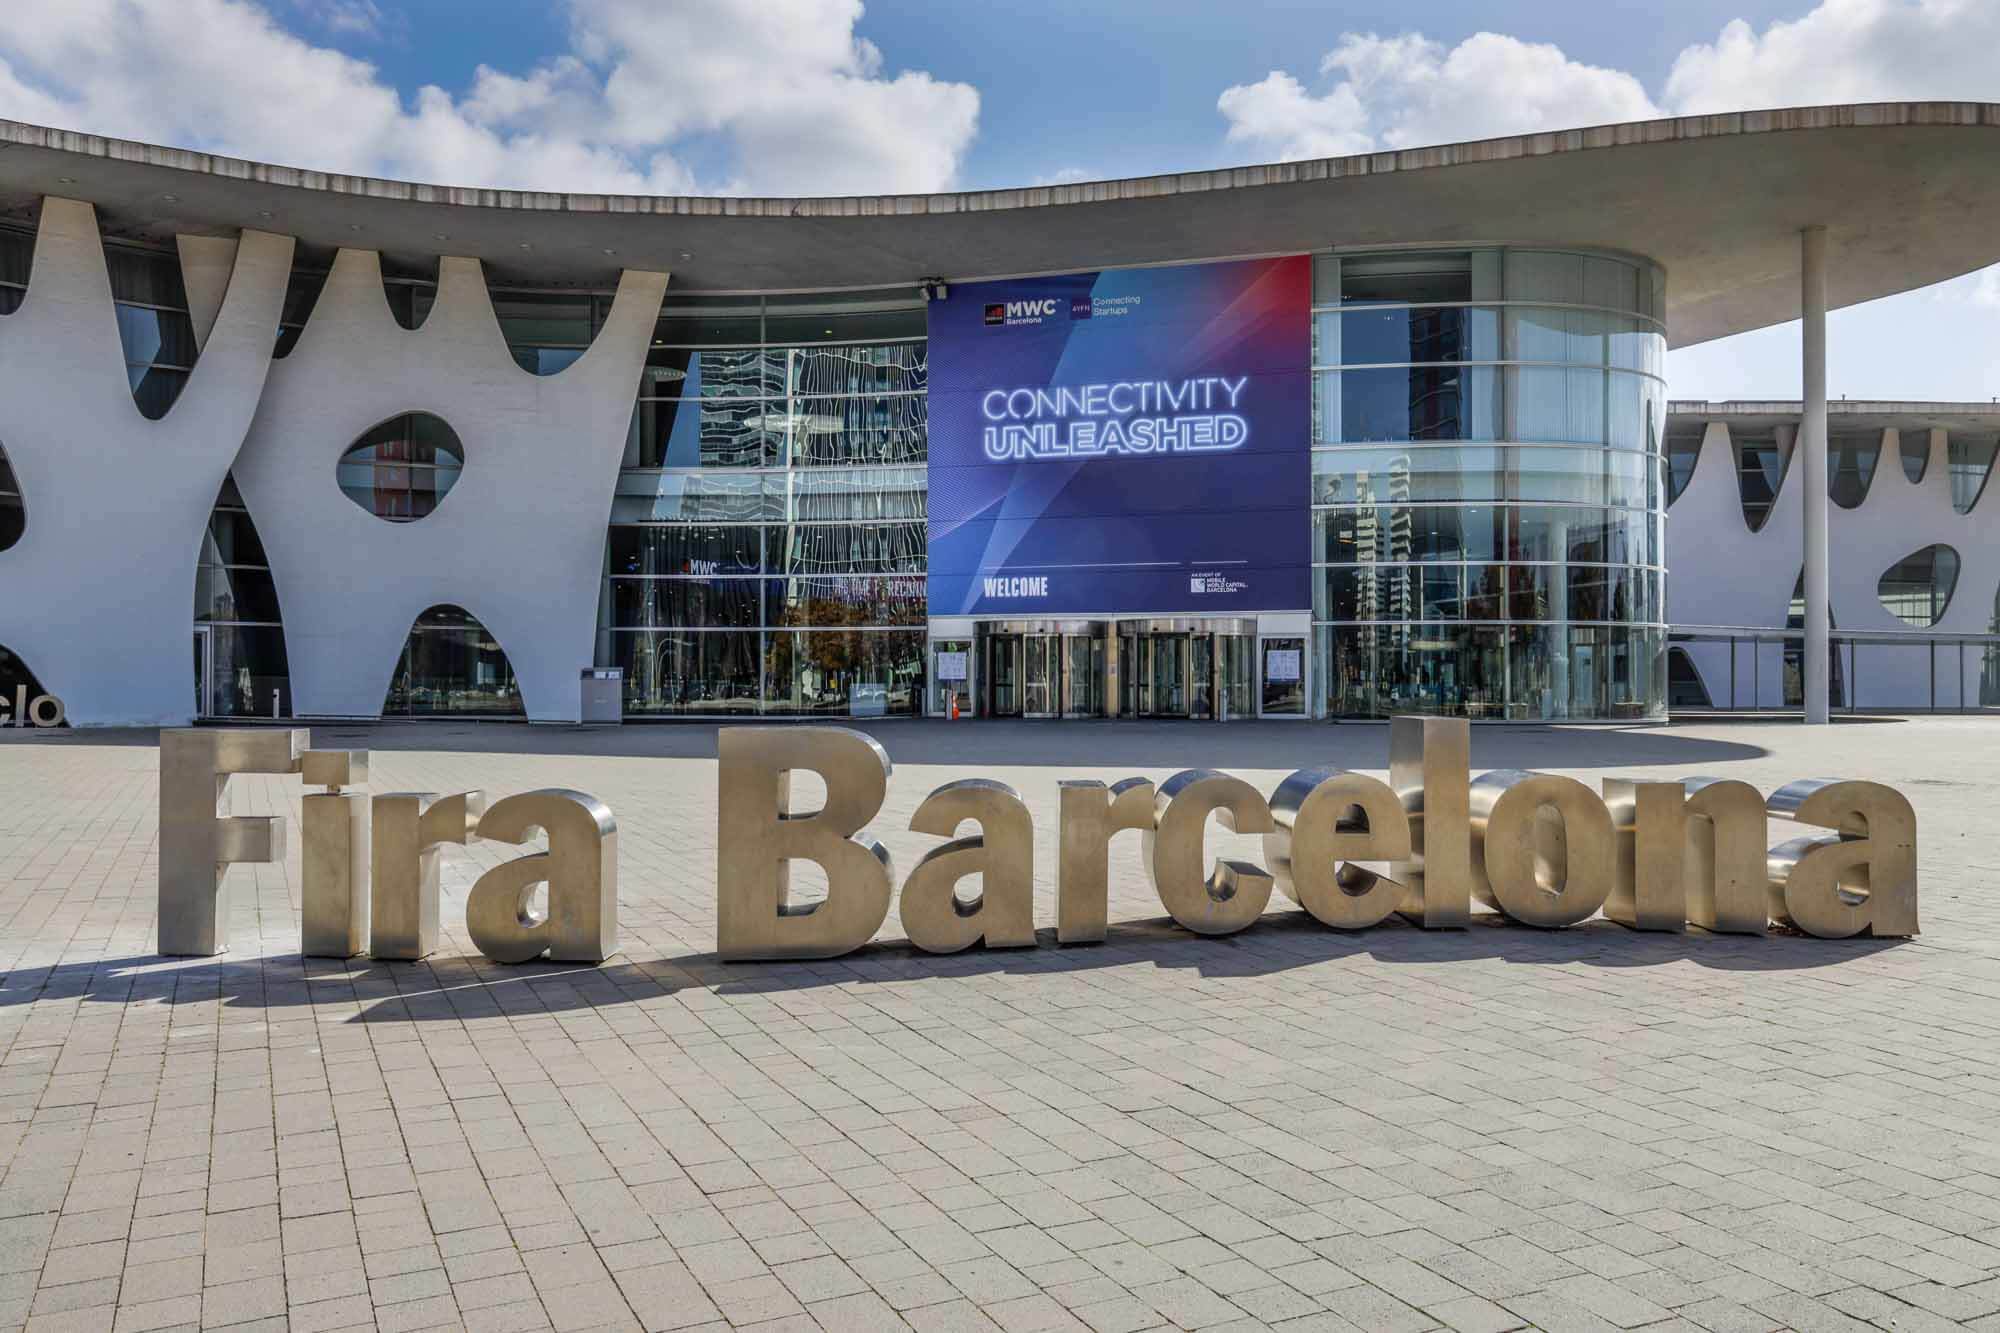 MWC 2022 Barcelona